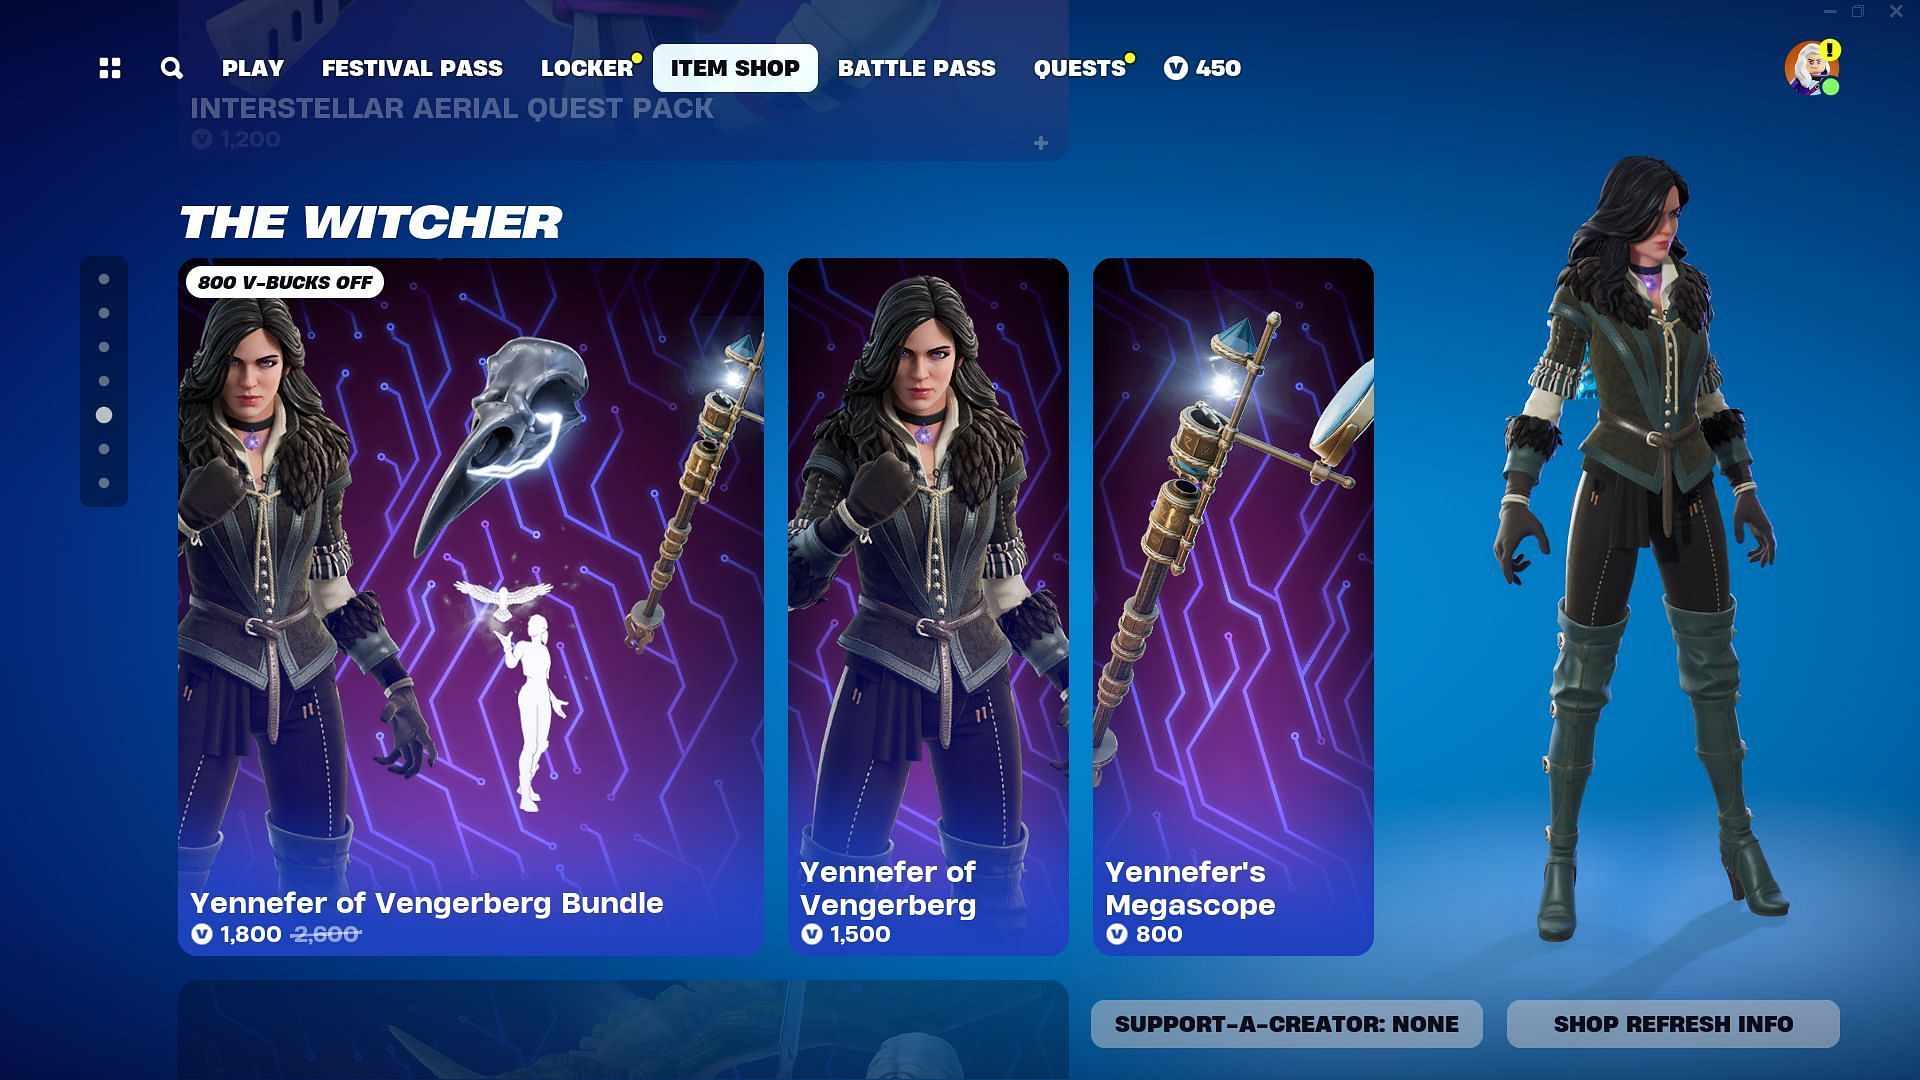 Yennefer of Vengerberg Bundle is currently listed in the Item Shop (Image via Epic Games/Fortnite)